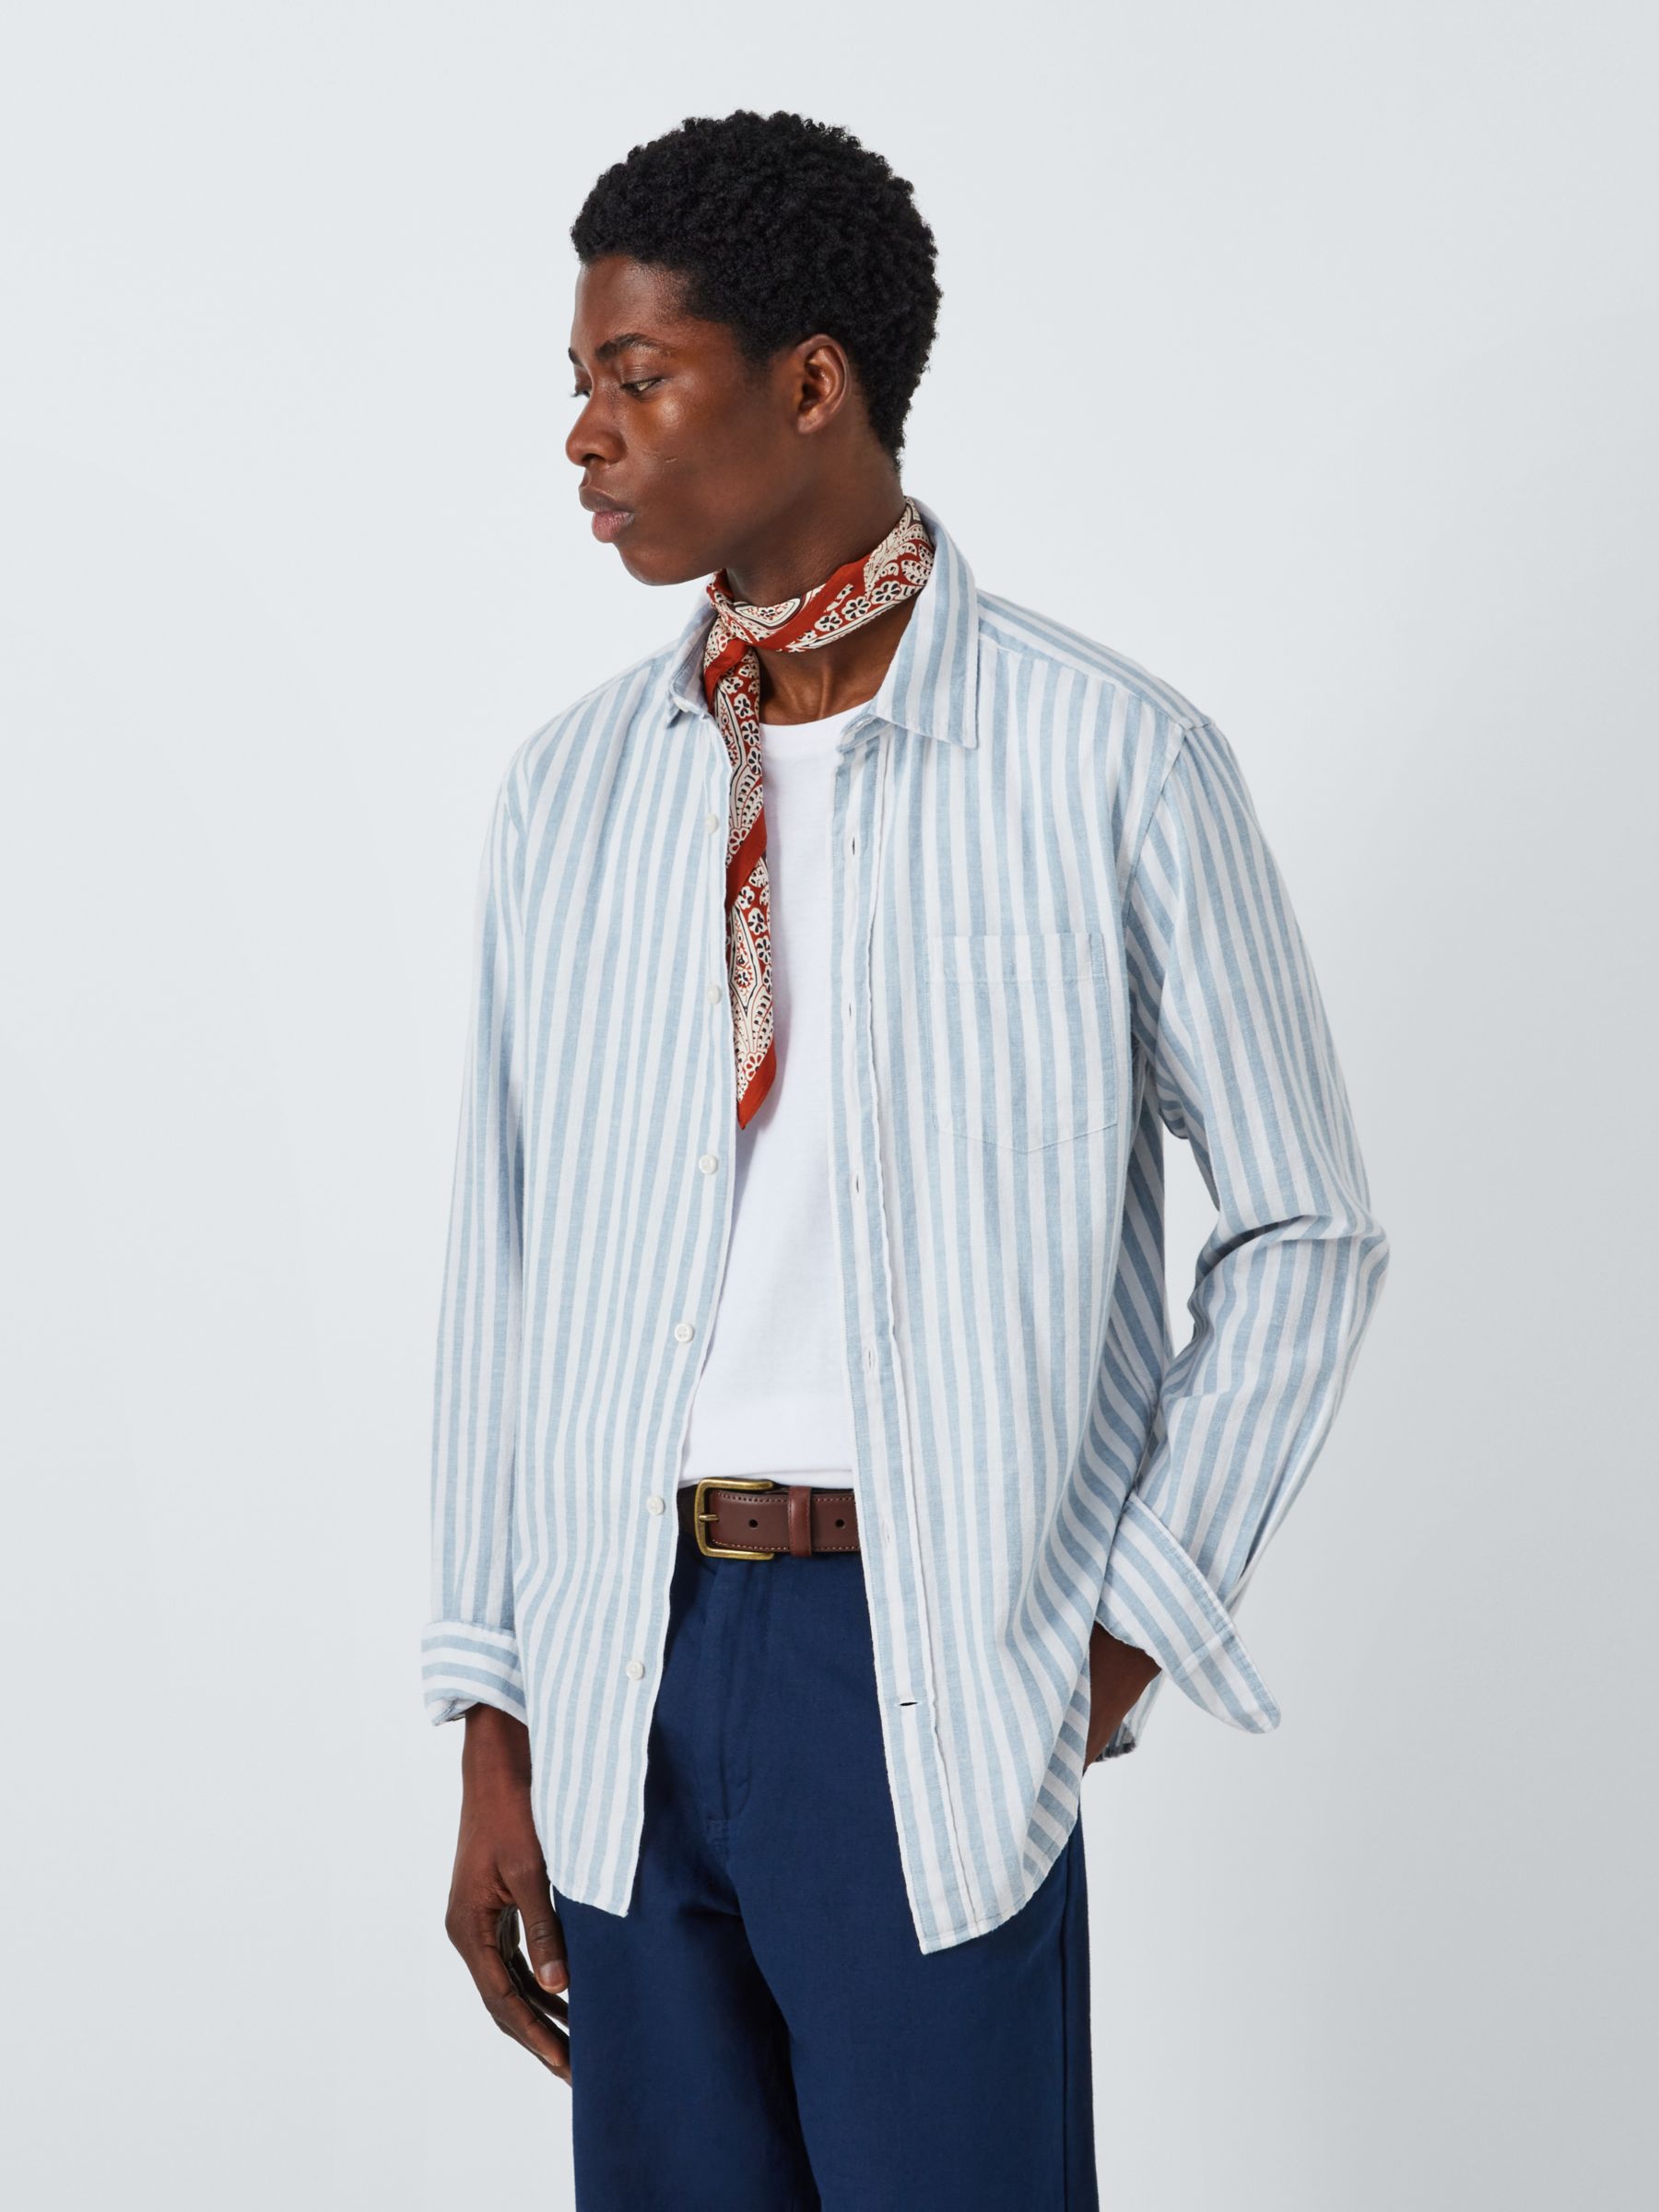 Buy John Lewis Linen Blend Stripe Long Sleeve Shirt Online at johnlewis.com